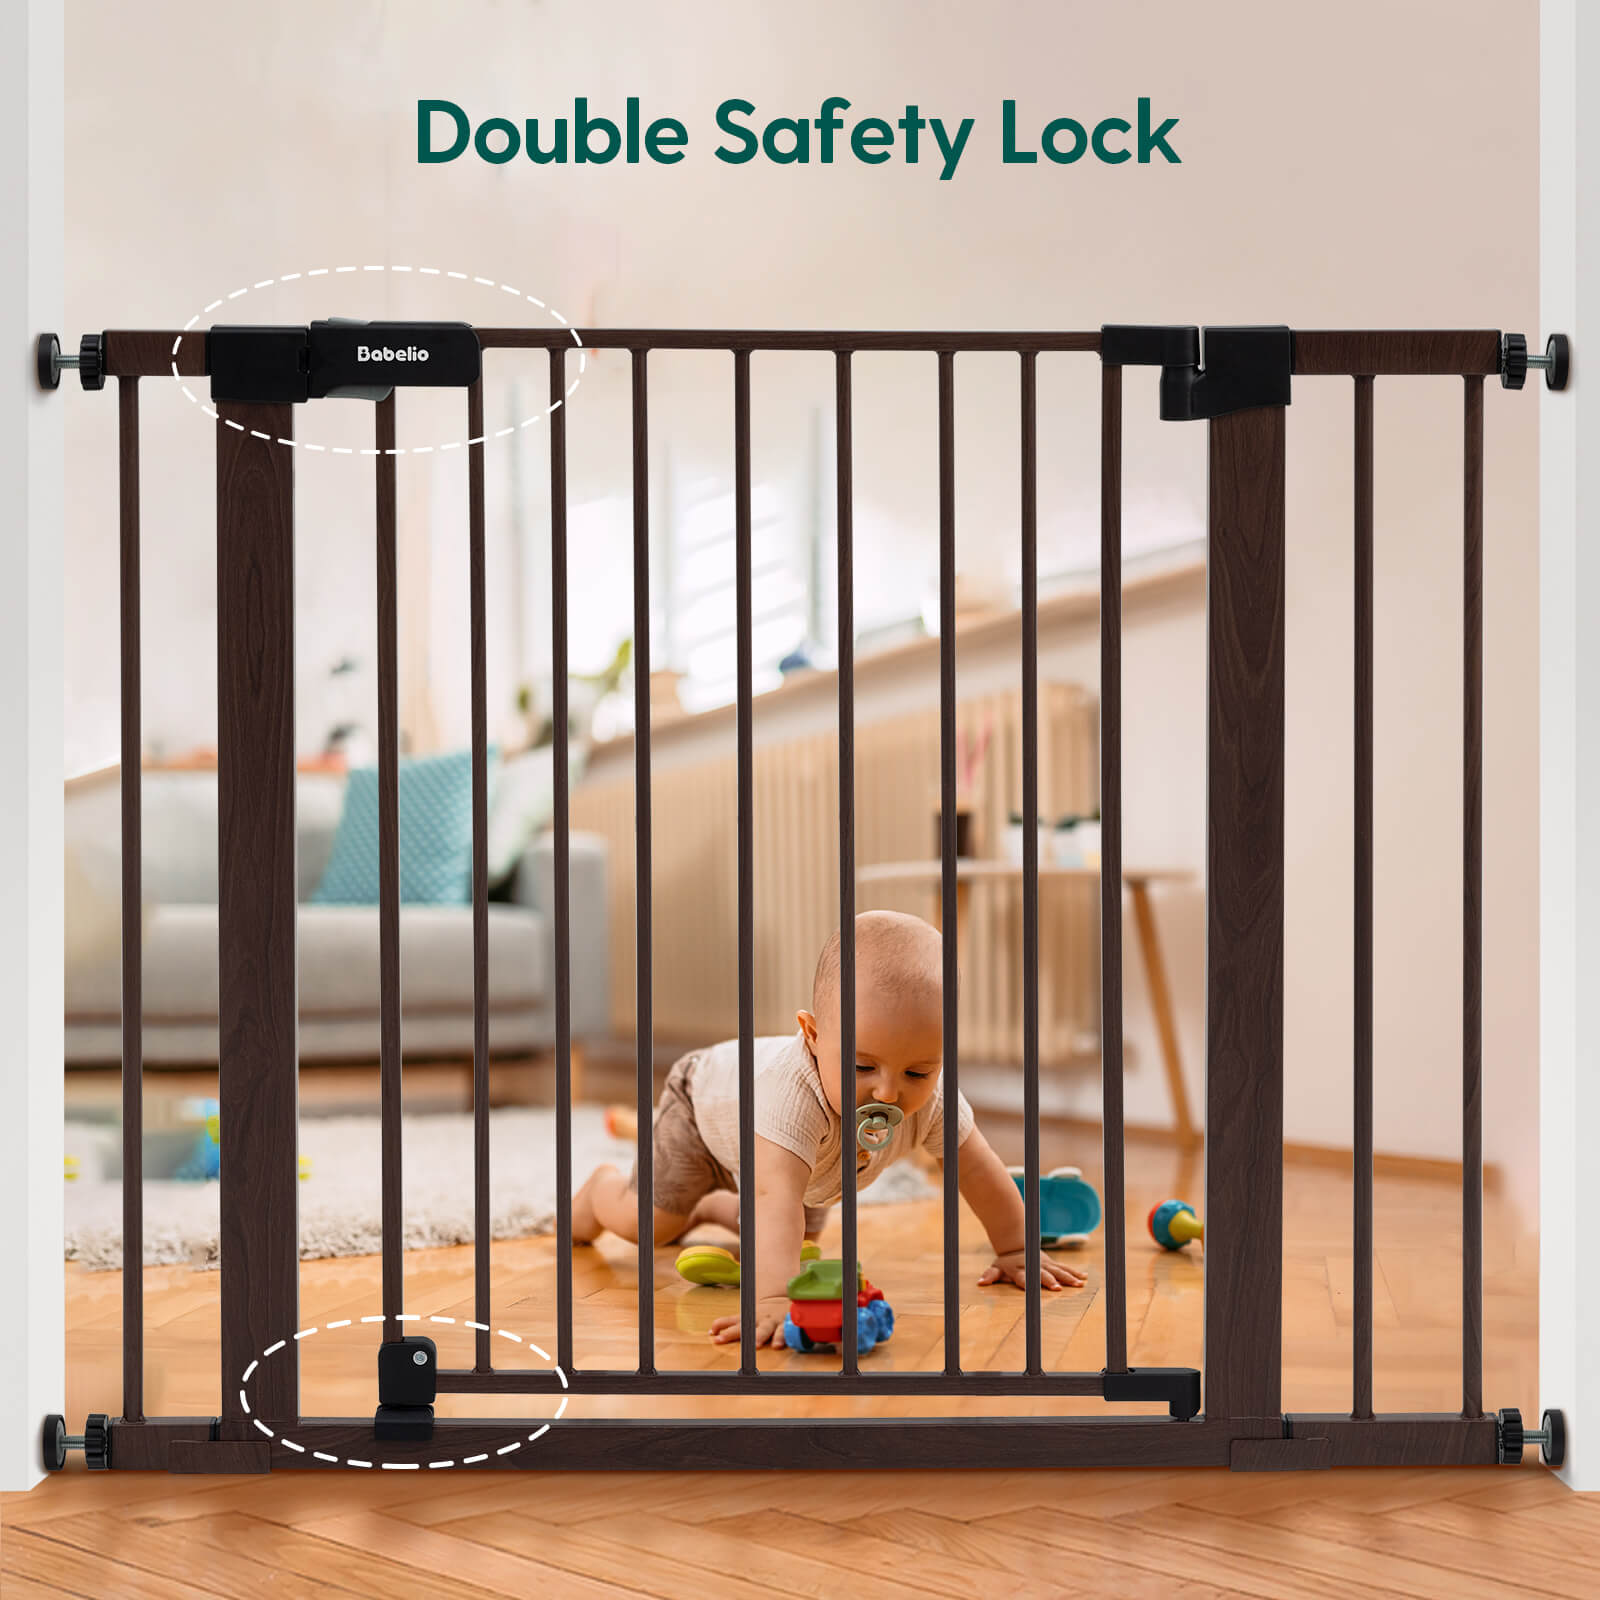 Babelio 29-40" Versatile Metal Safety Gate – Auto-Close, One-Hand Operation, for Stairs & Doorways, Pressure Mount